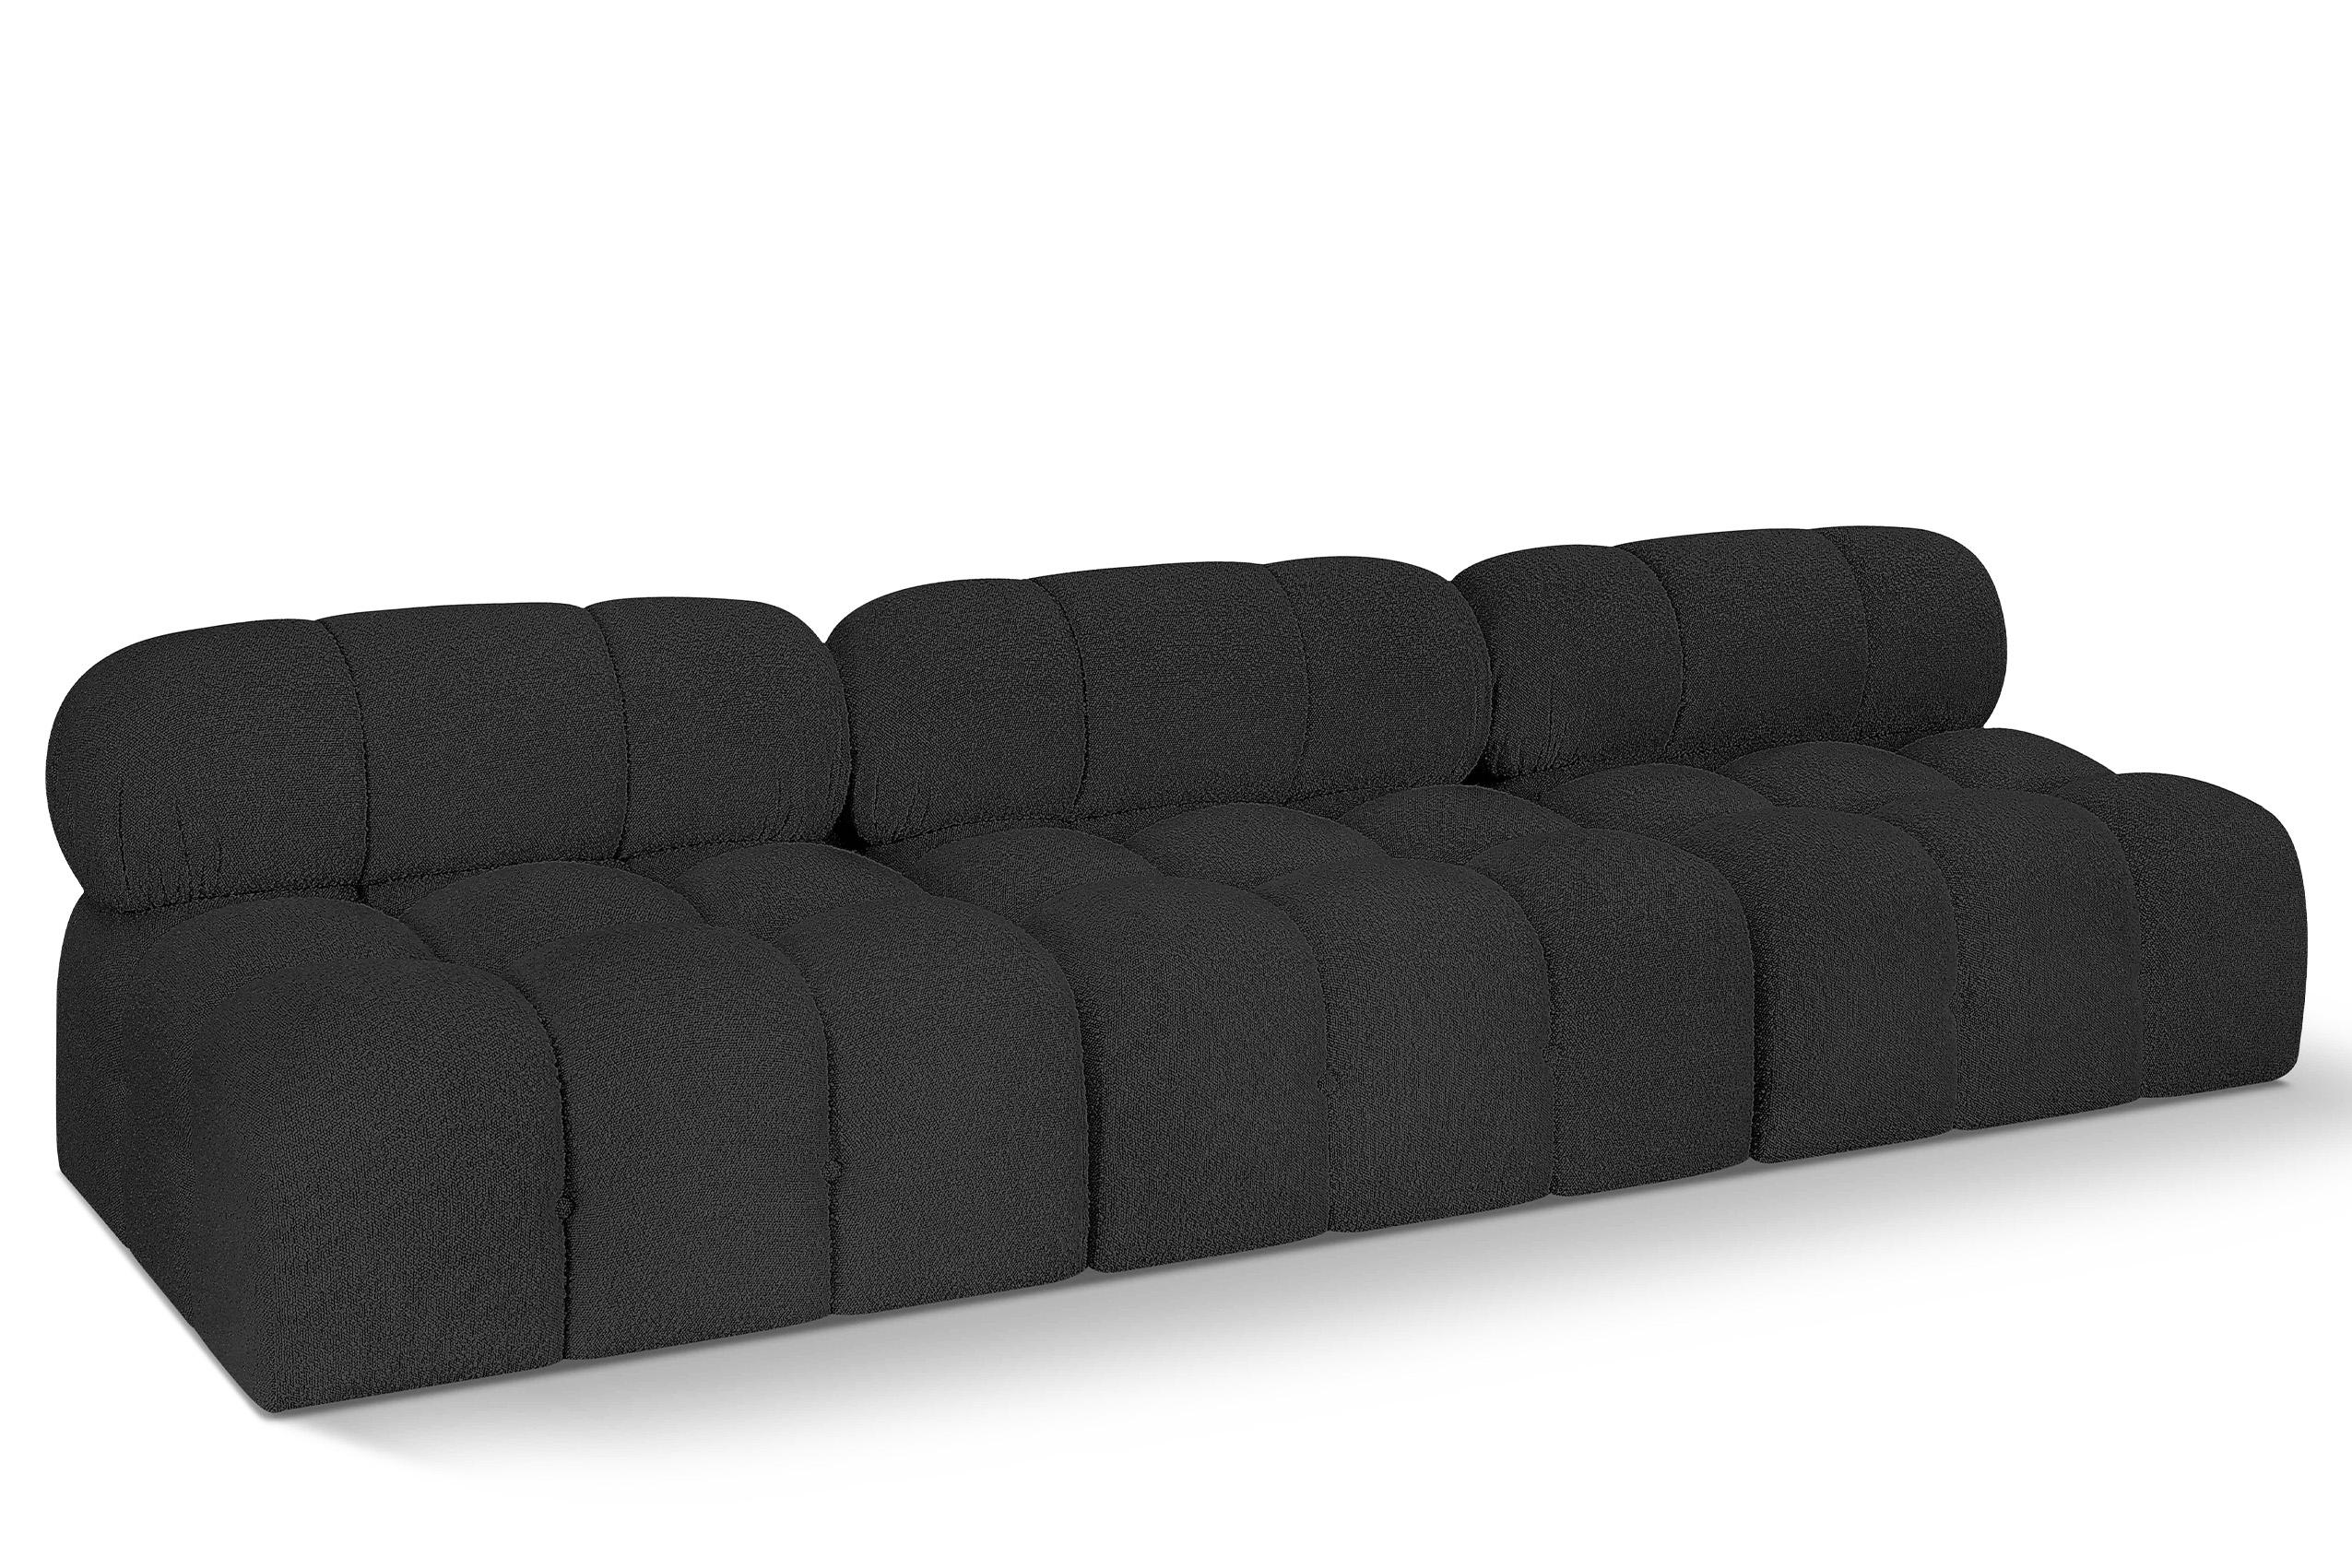 Contemporary, Modern Modular Sofa AMES 611Black-S102B 611Black-S102B in Black 